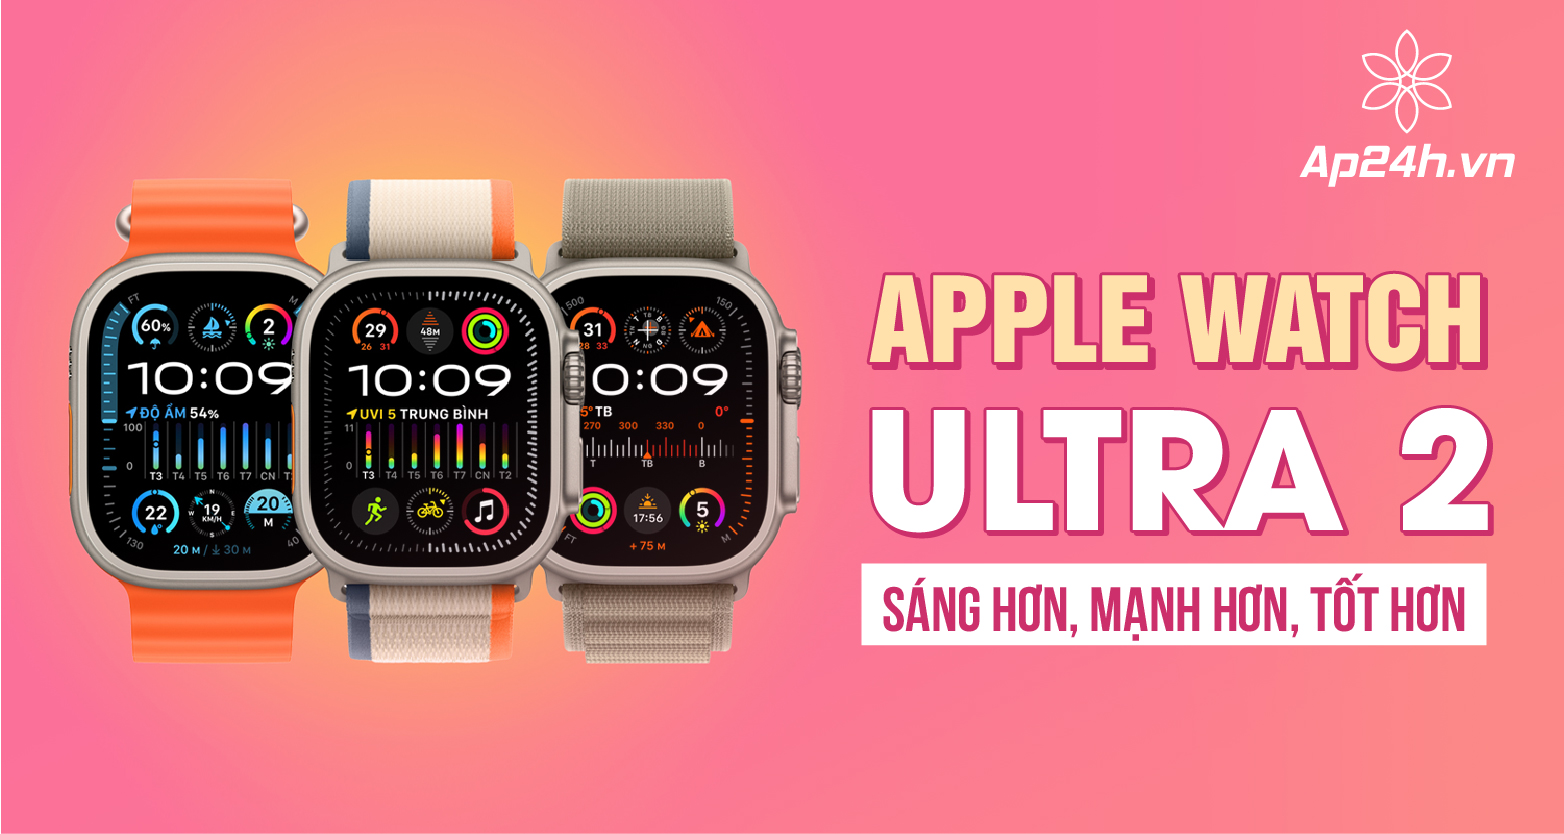  Đánh giá Apple Watch Ultra 2